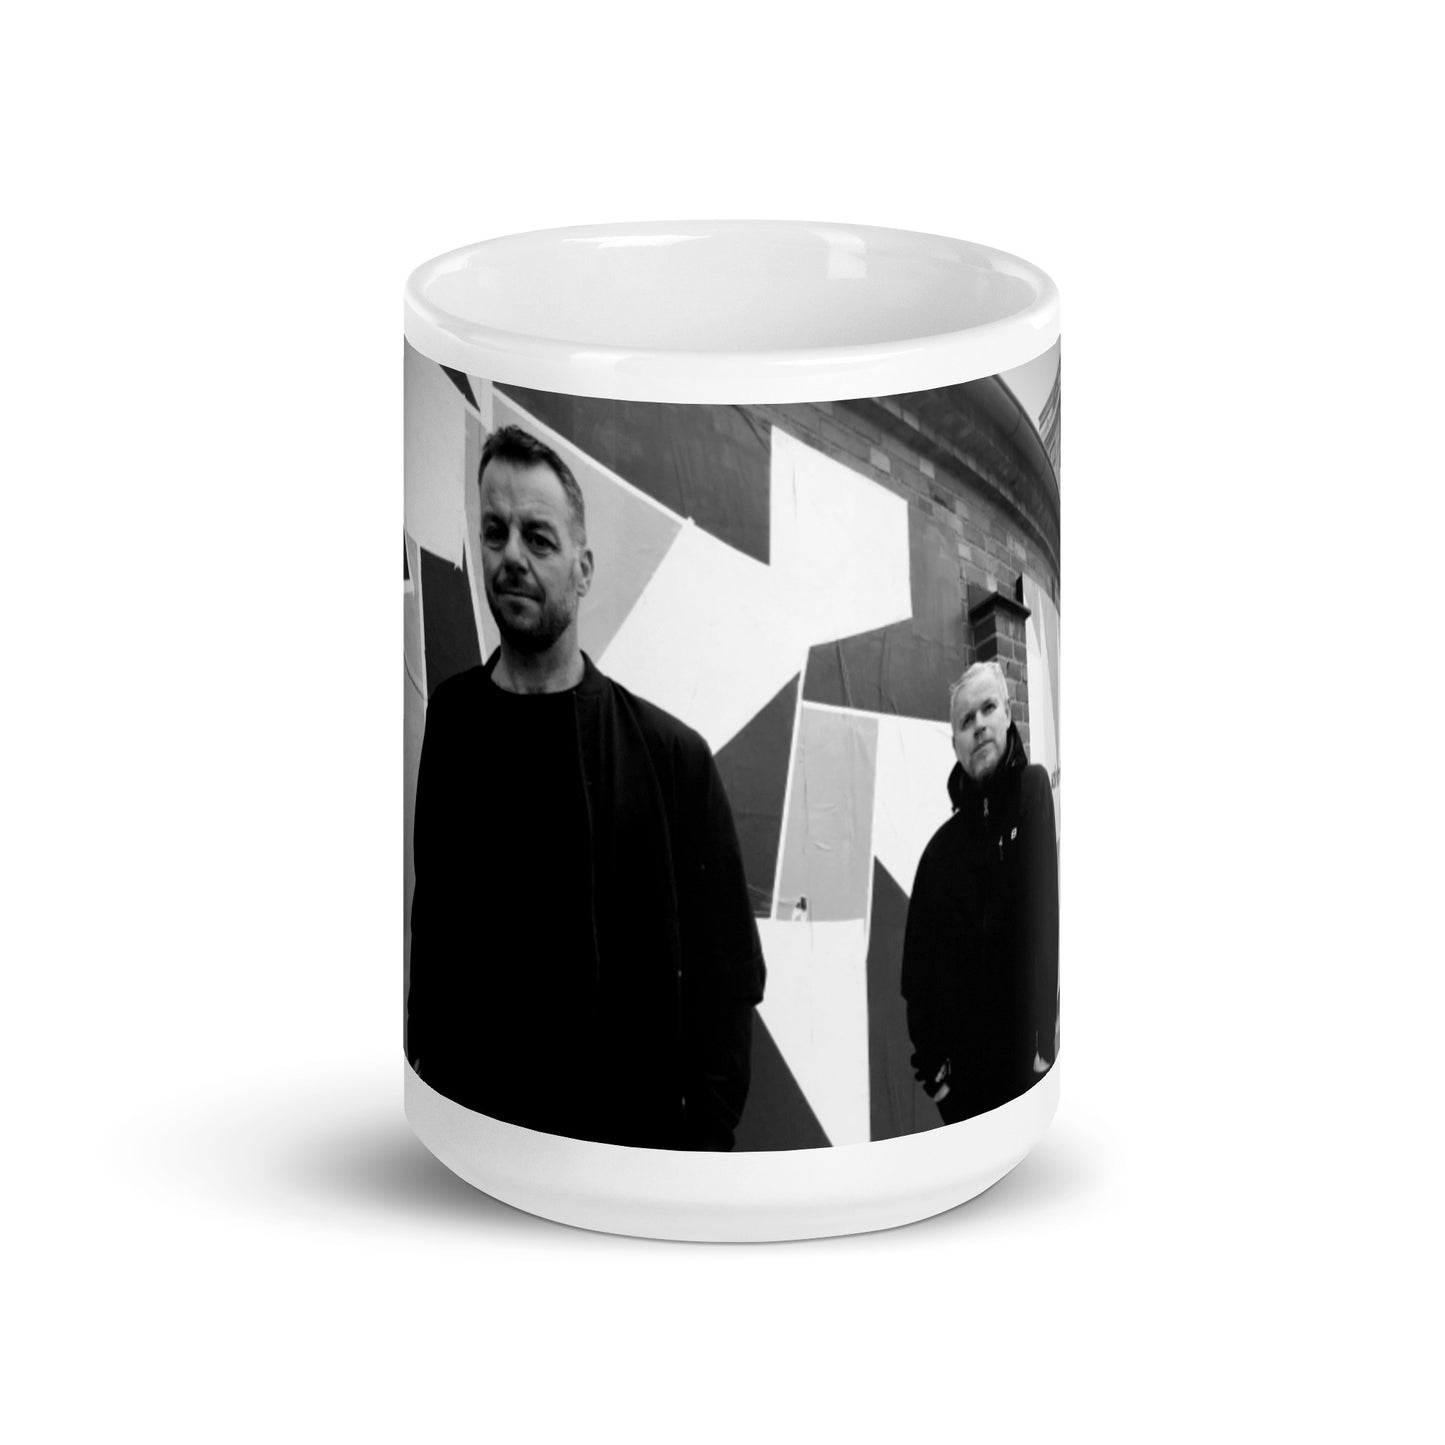 Split Vision, official band photo and logo, White glossy mug